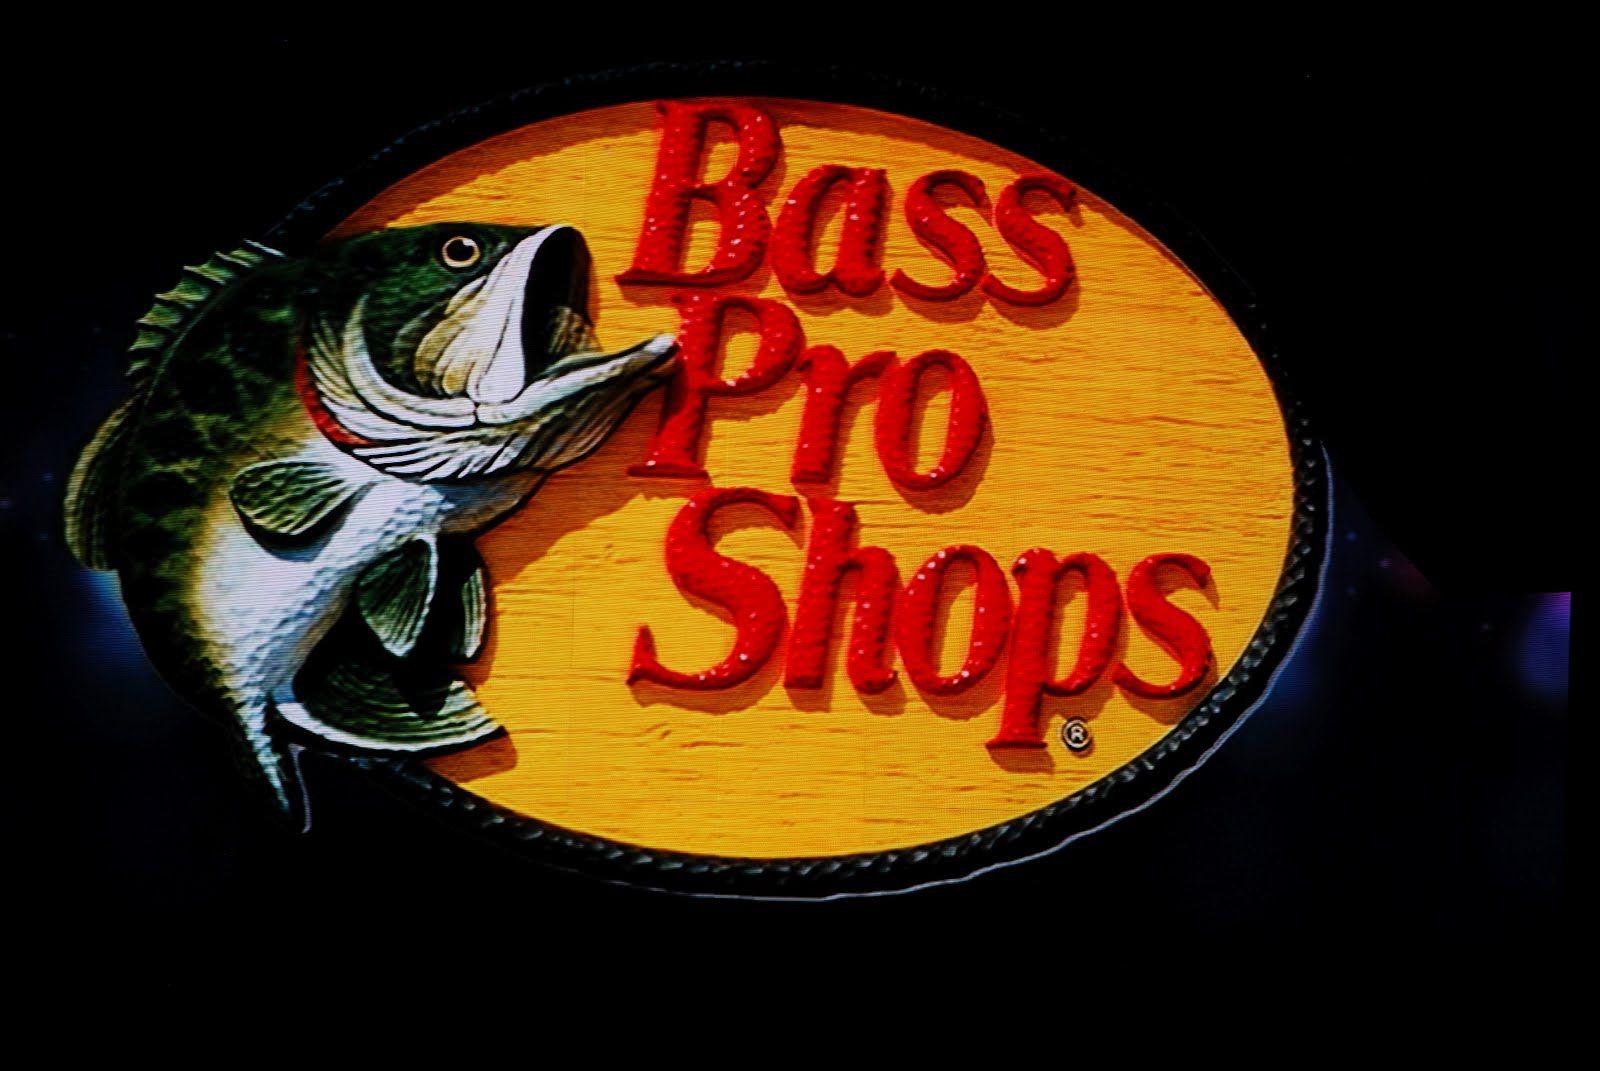 Bass Pro Shop Backgrounds - Wallpaper Cave